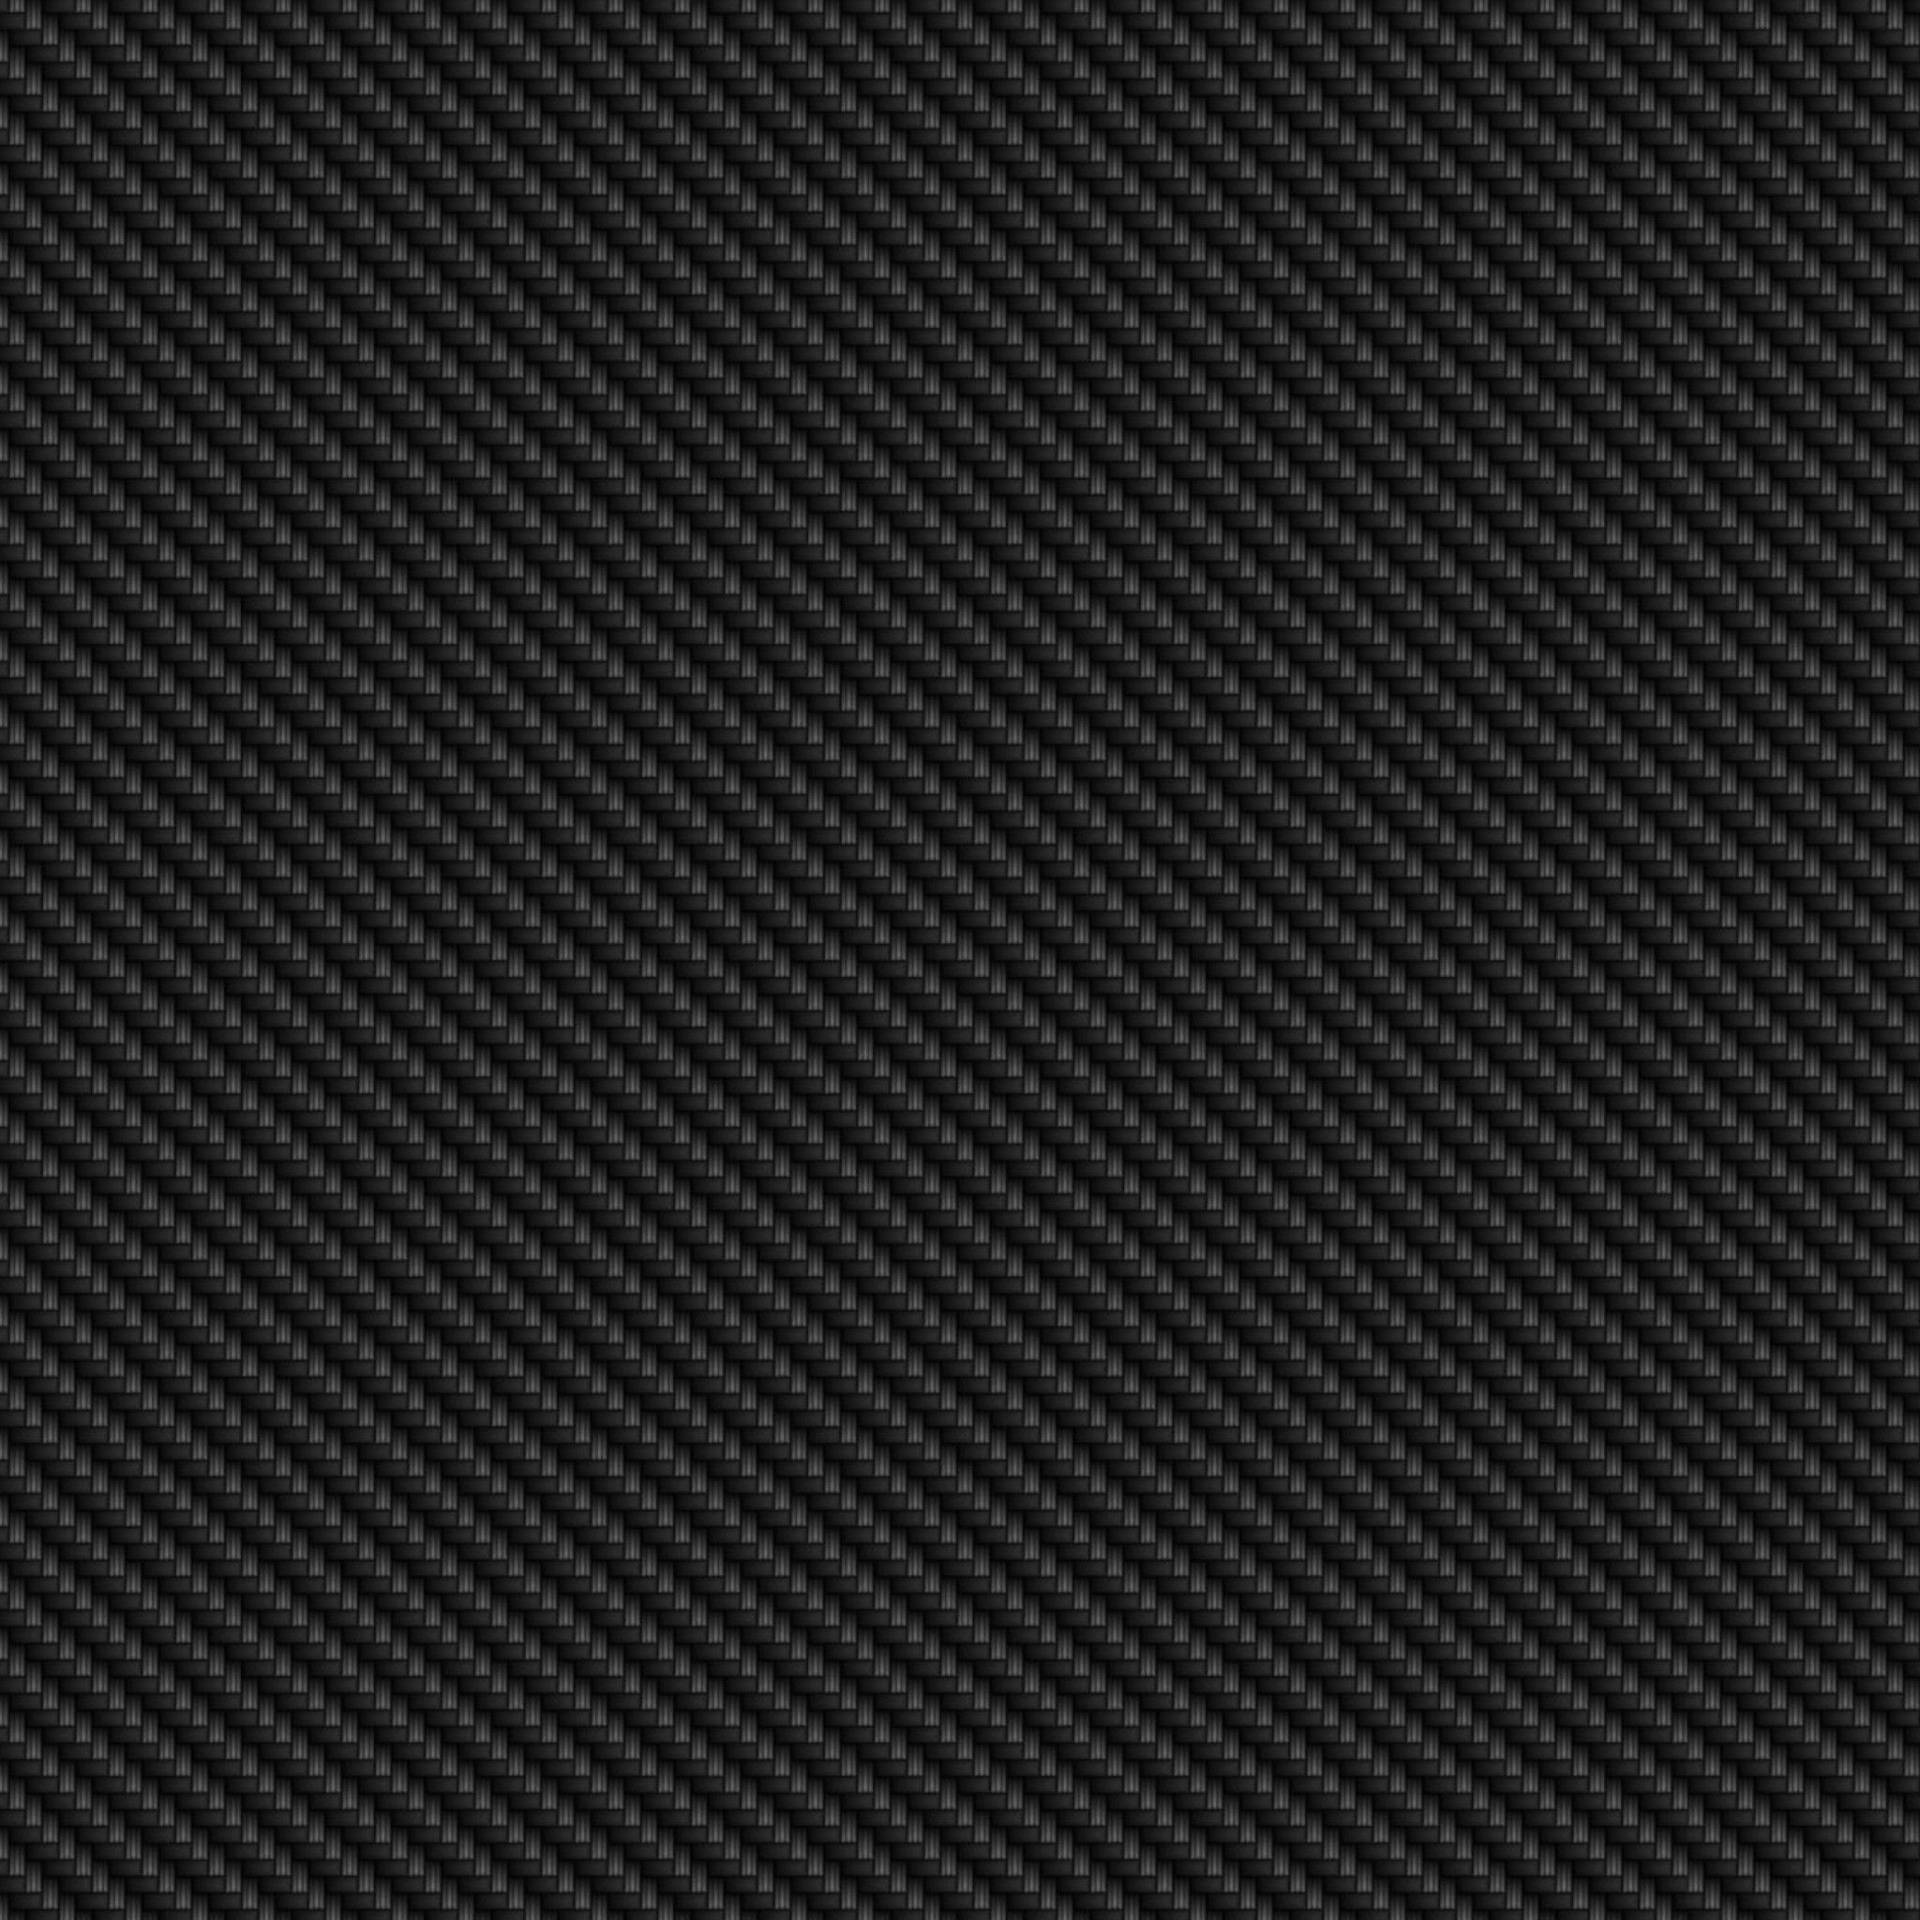 Carbon Fiber In Square 4k Background